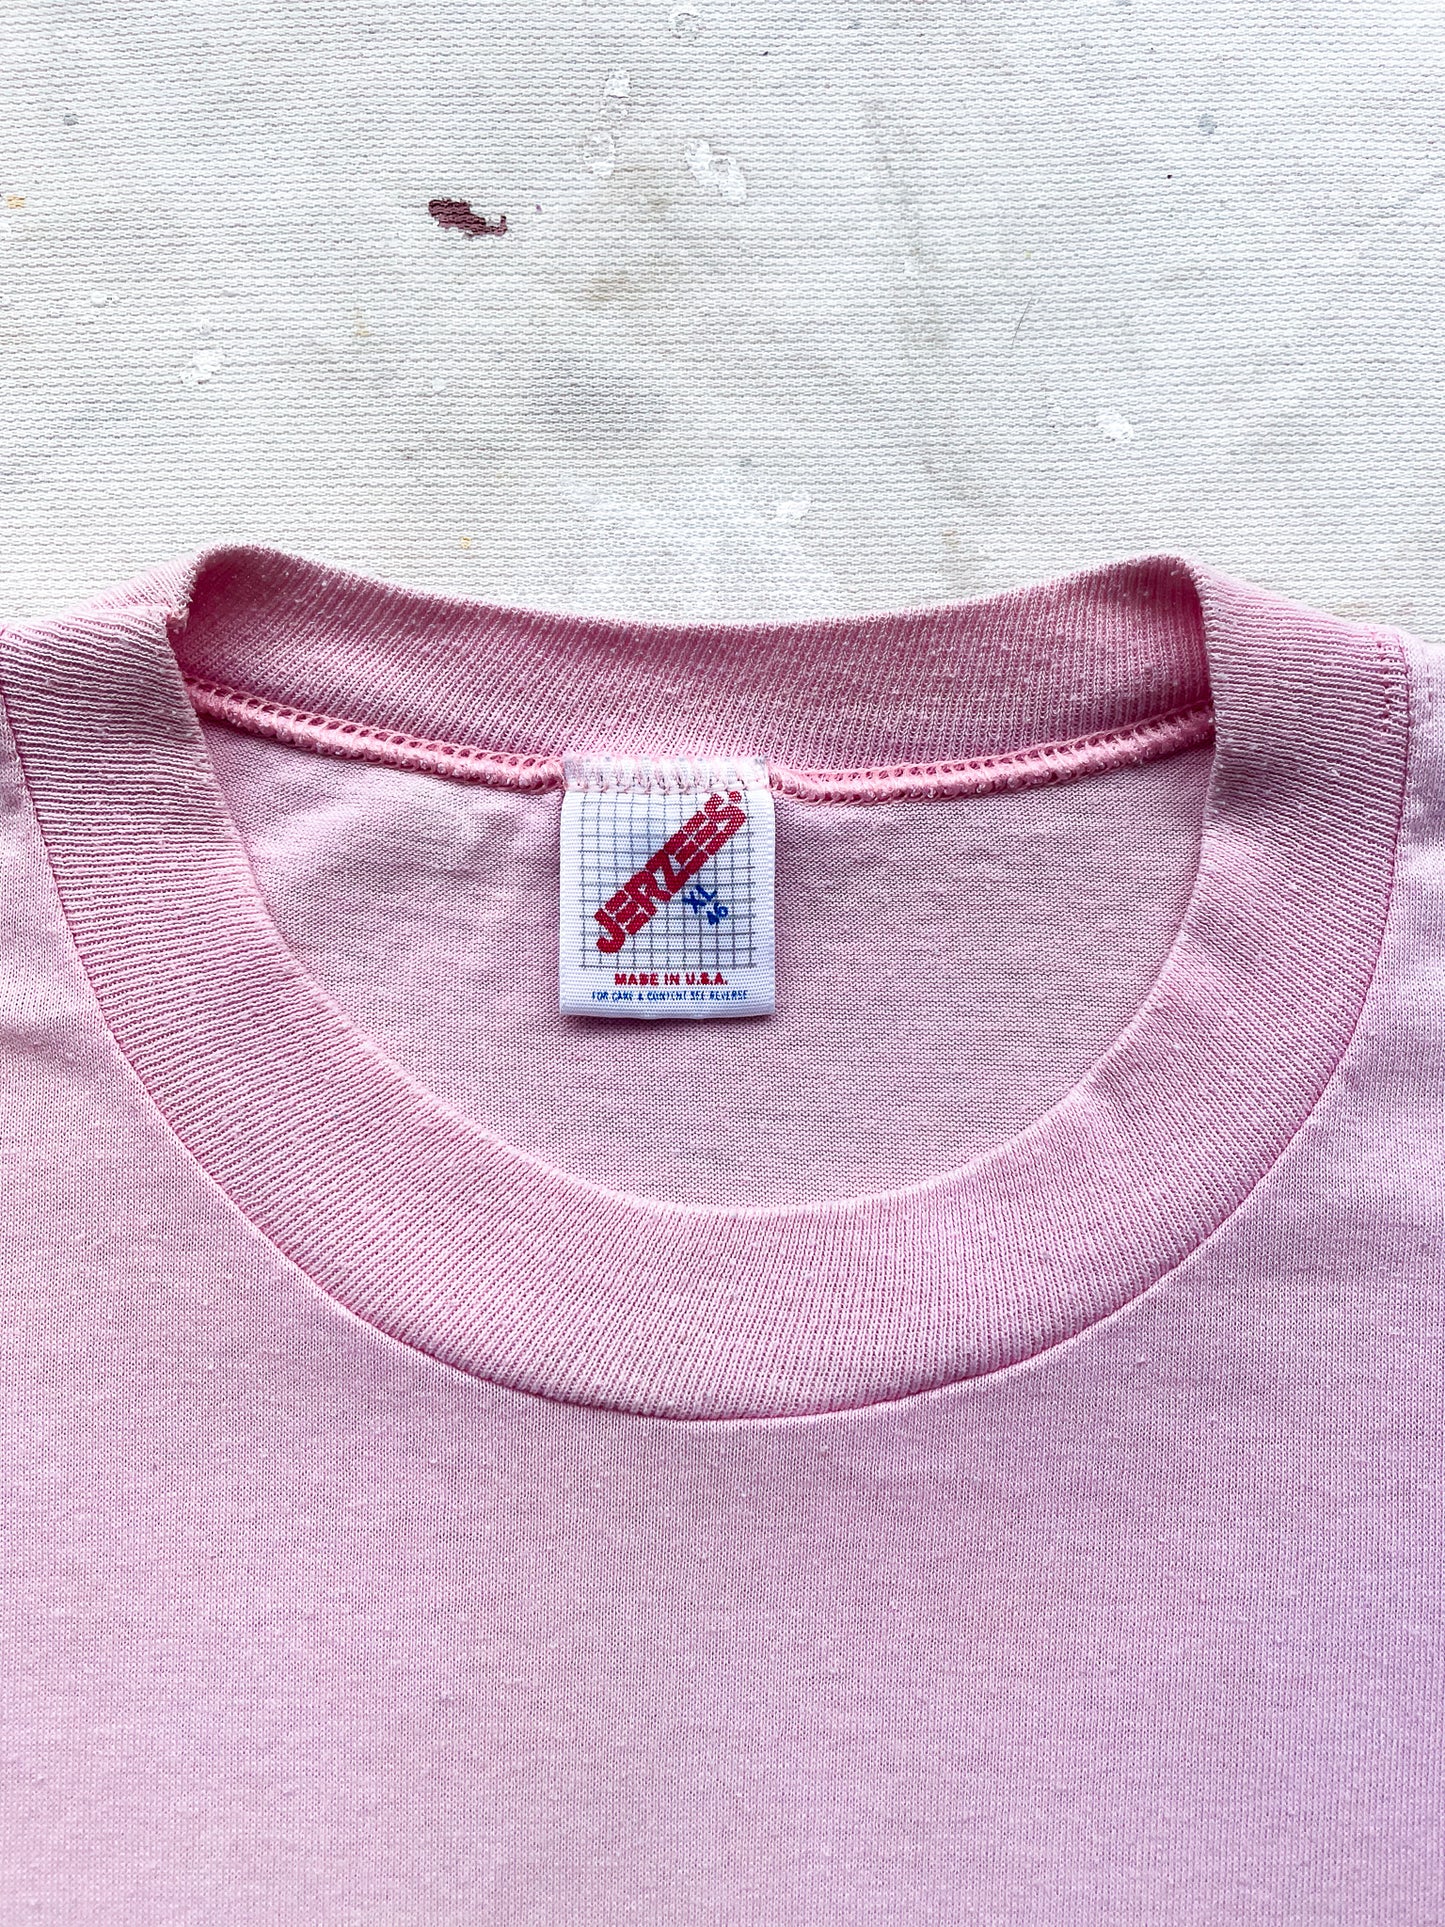 90's Sahauro Girl Scout T-Shirt—[L]